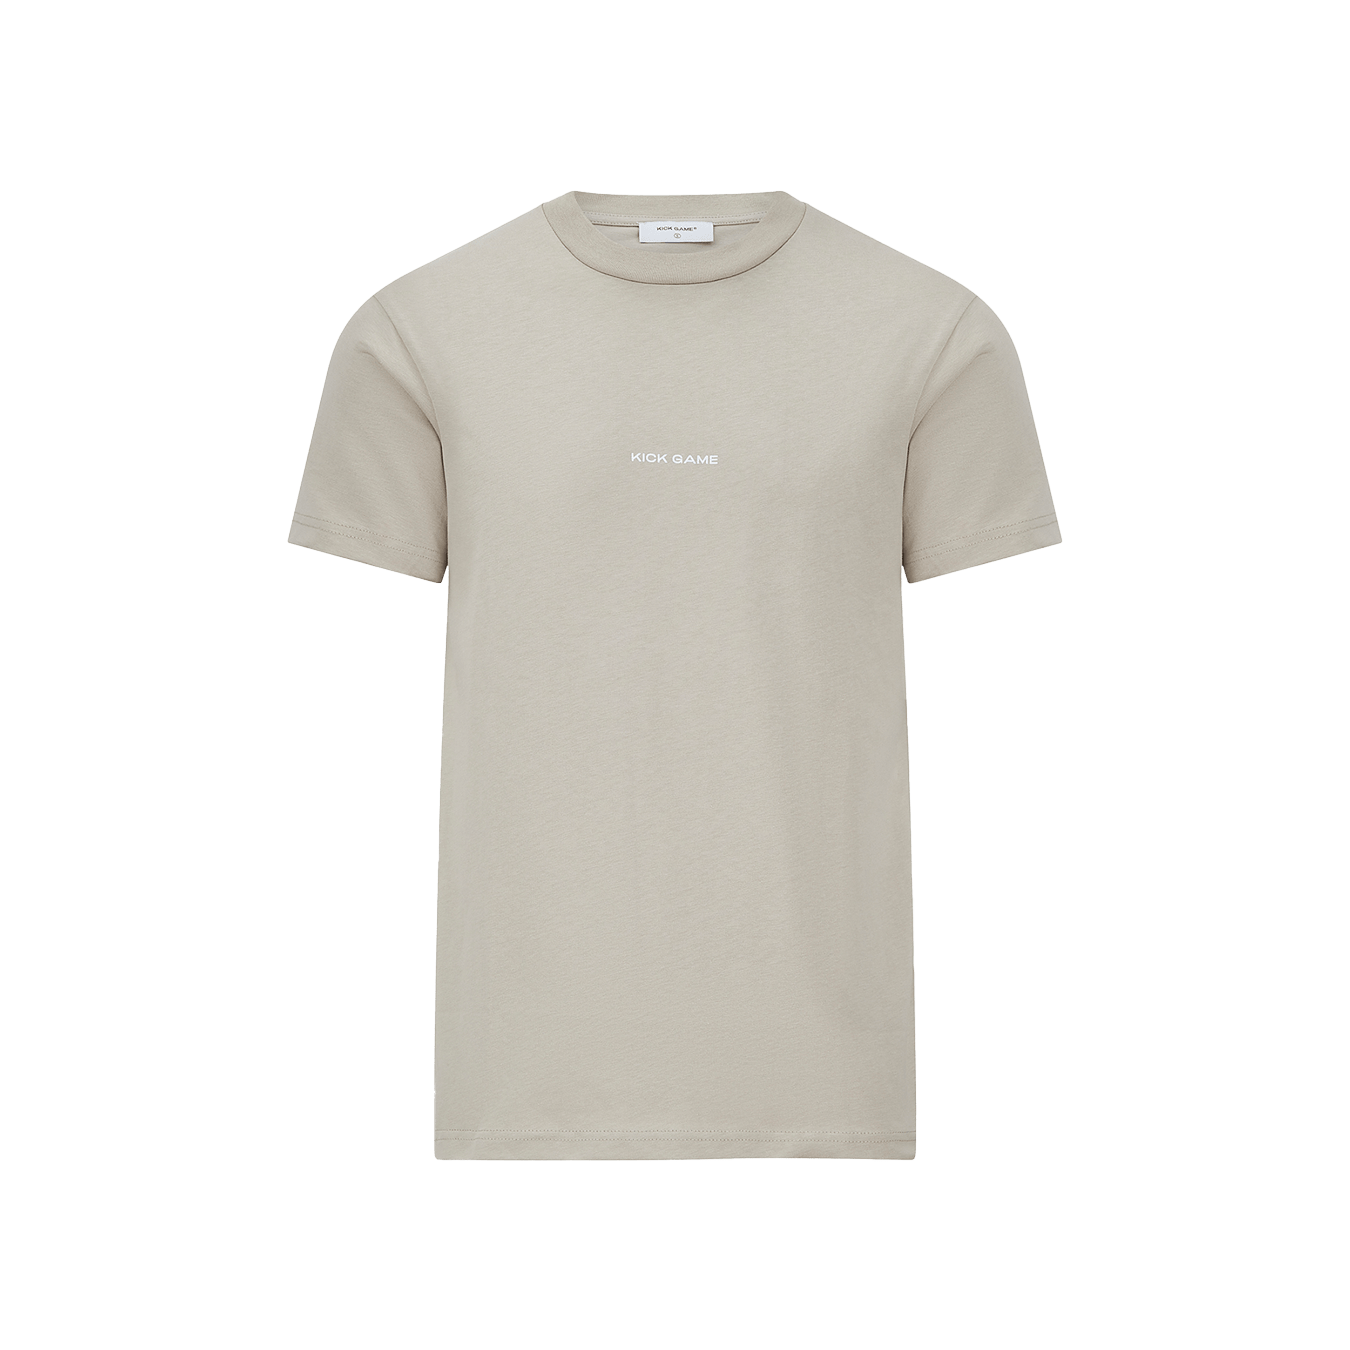 Drip City - Supreme tees' Men's Tall T-Shirt